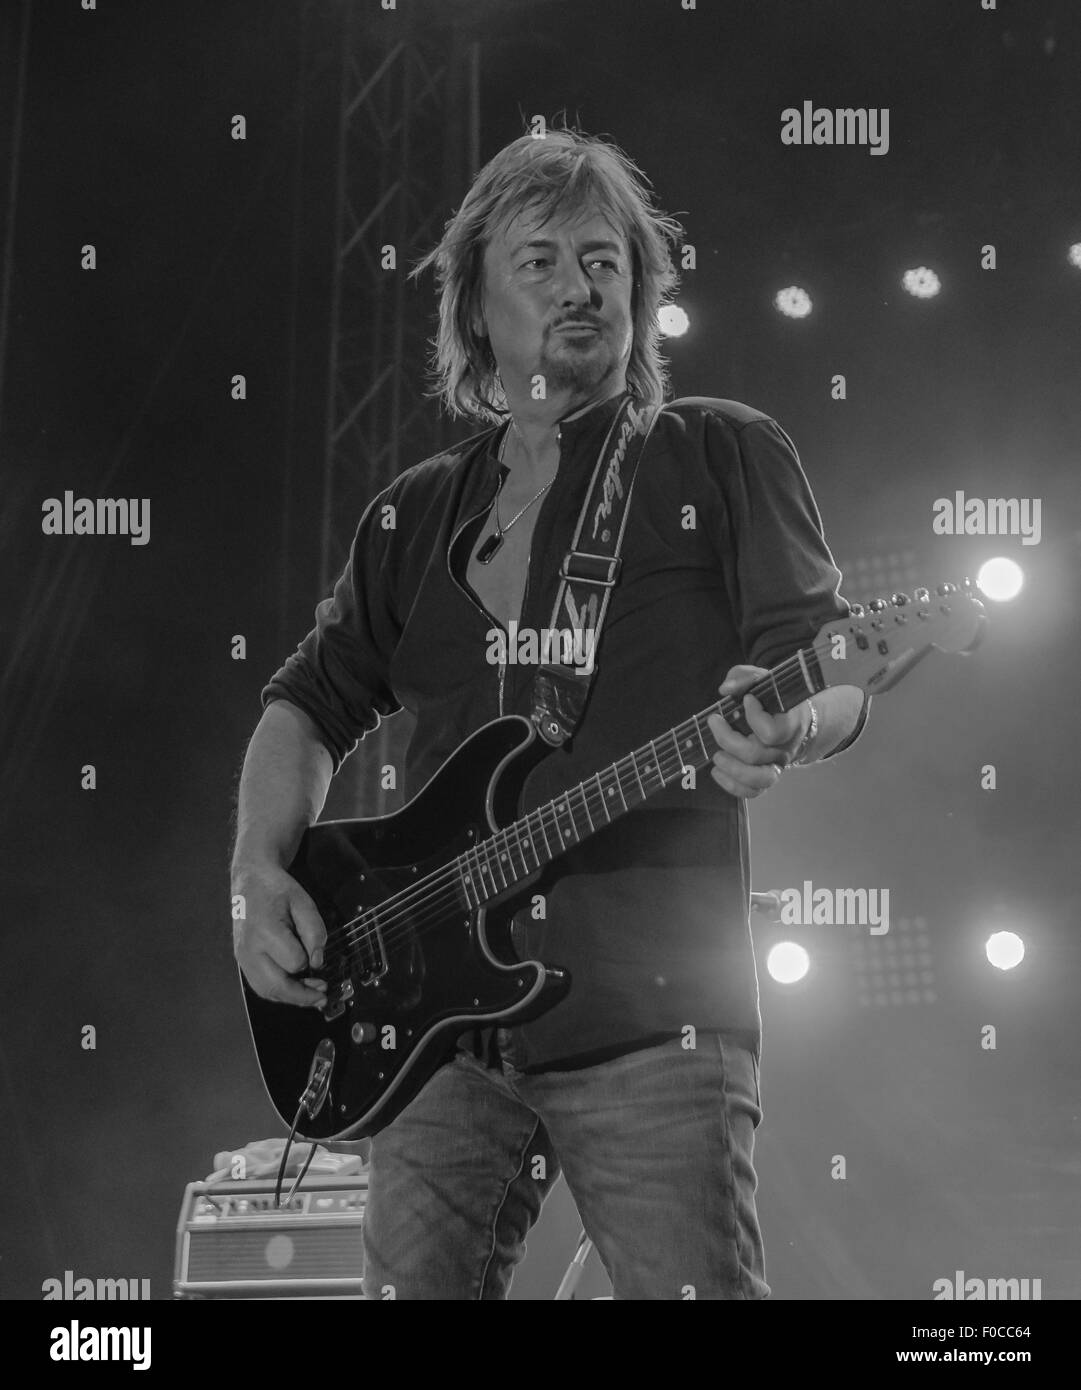 Chris Norman in a concert - guitar solo Stock Photo